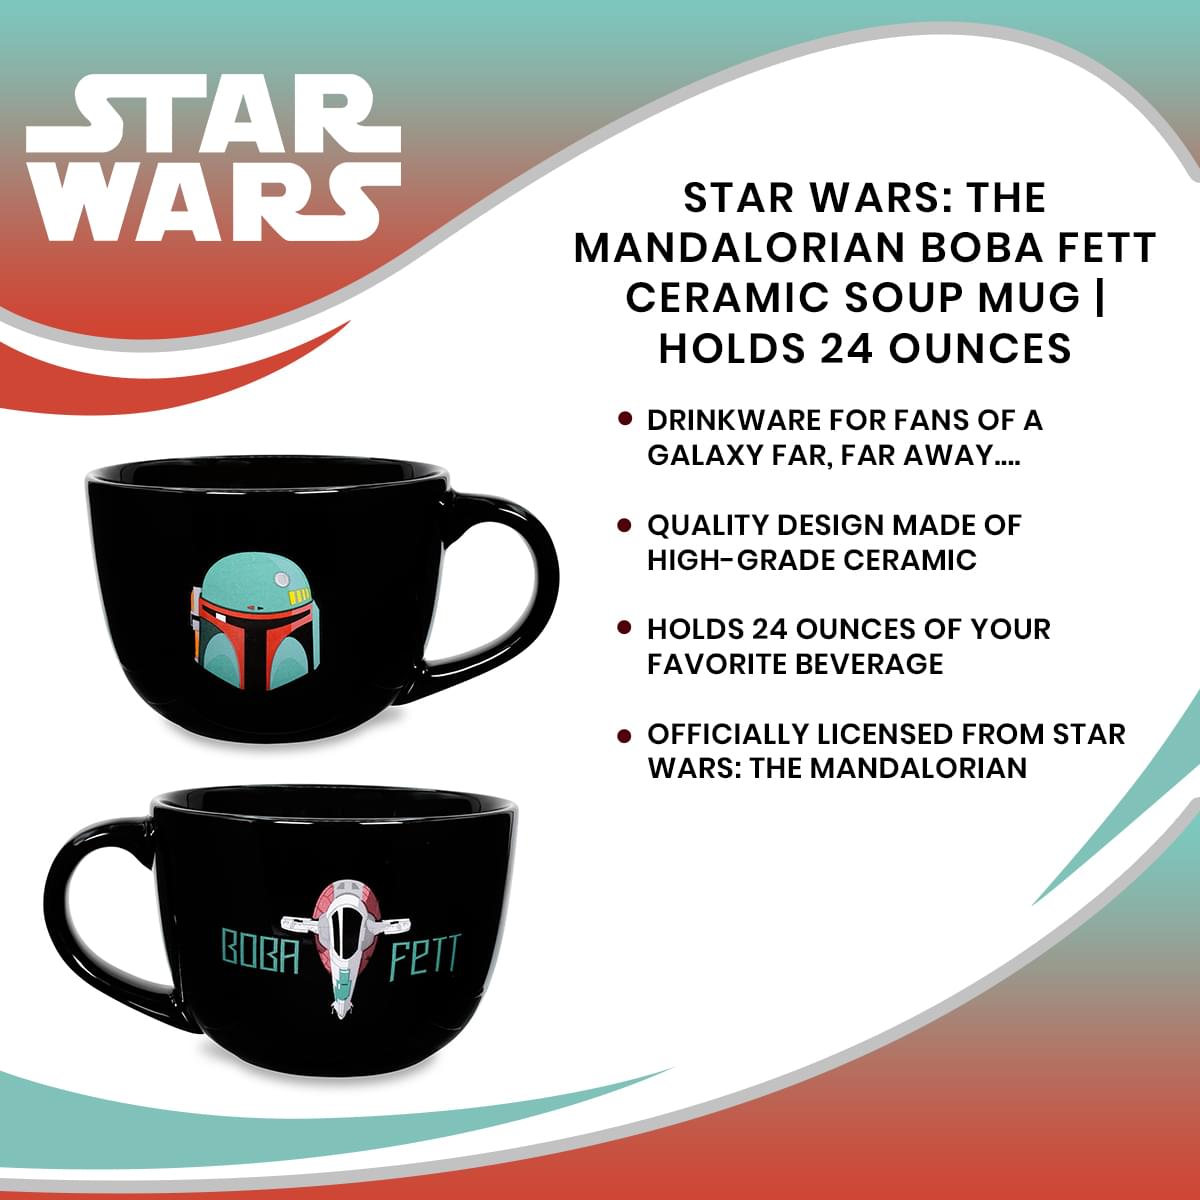 Star Wars: The Mandalorian Boba Fett Ceramic Soup Mug | Holds 24 Ounces